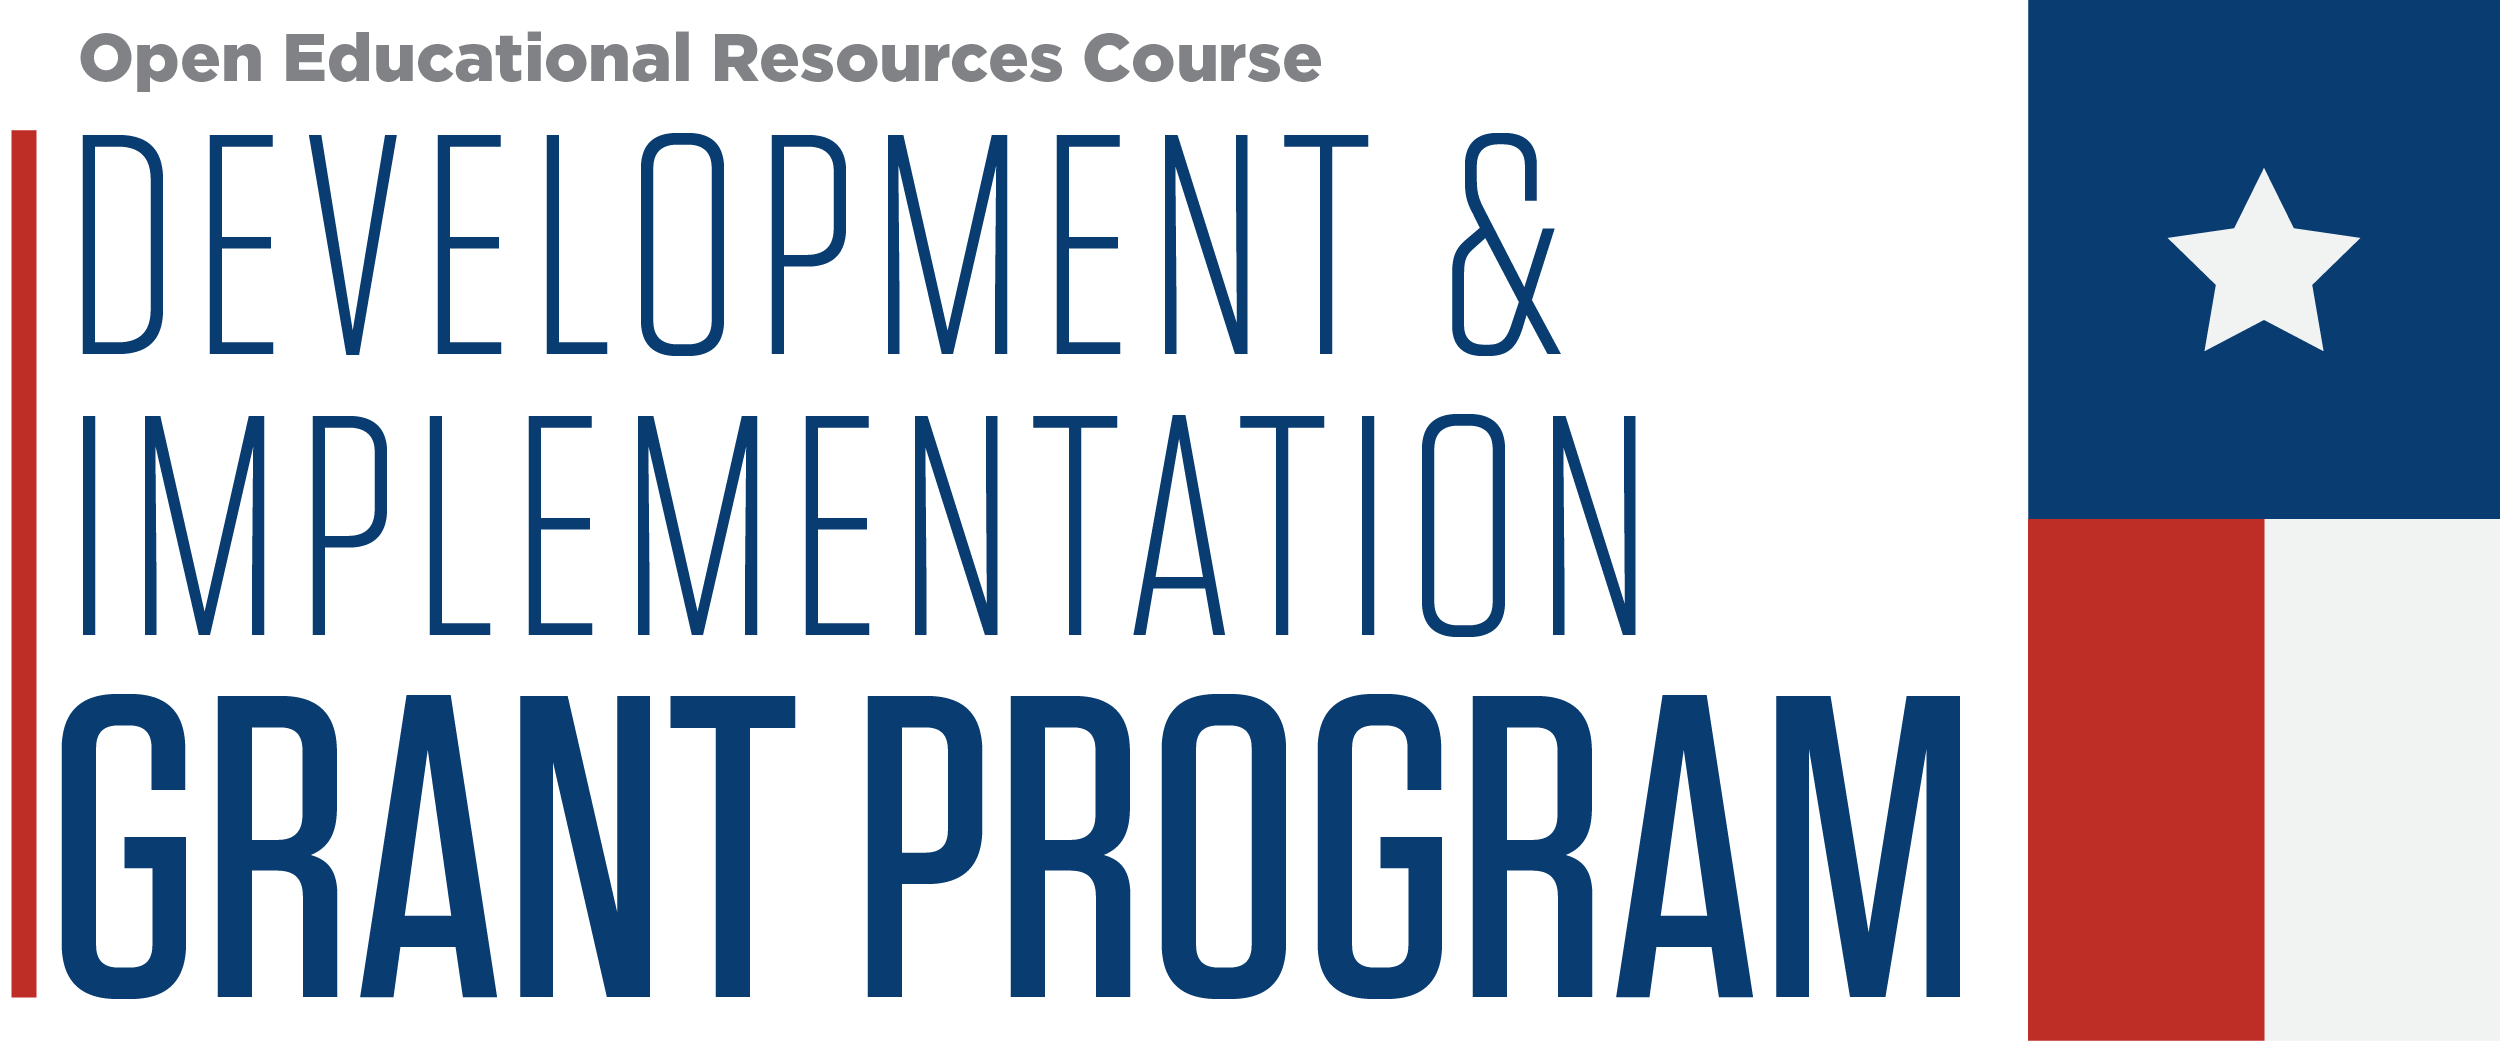 Open Educational Resources Course. Development and Implementation Grant Program